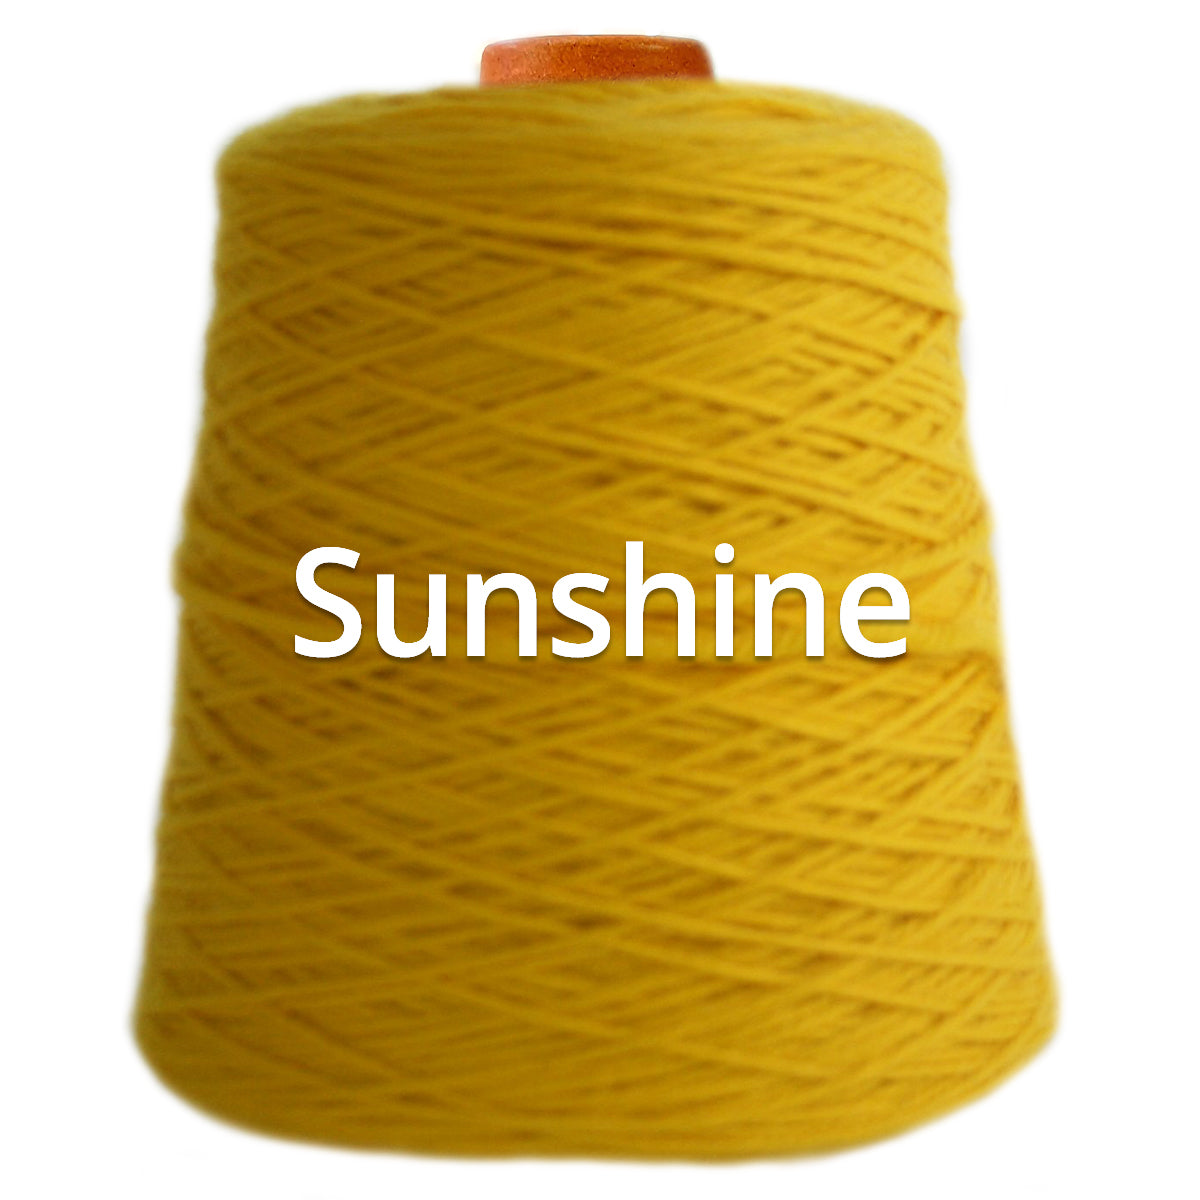 Sunshine - Nundle Collection 4 ply Chaffey Yarn 400g Cone